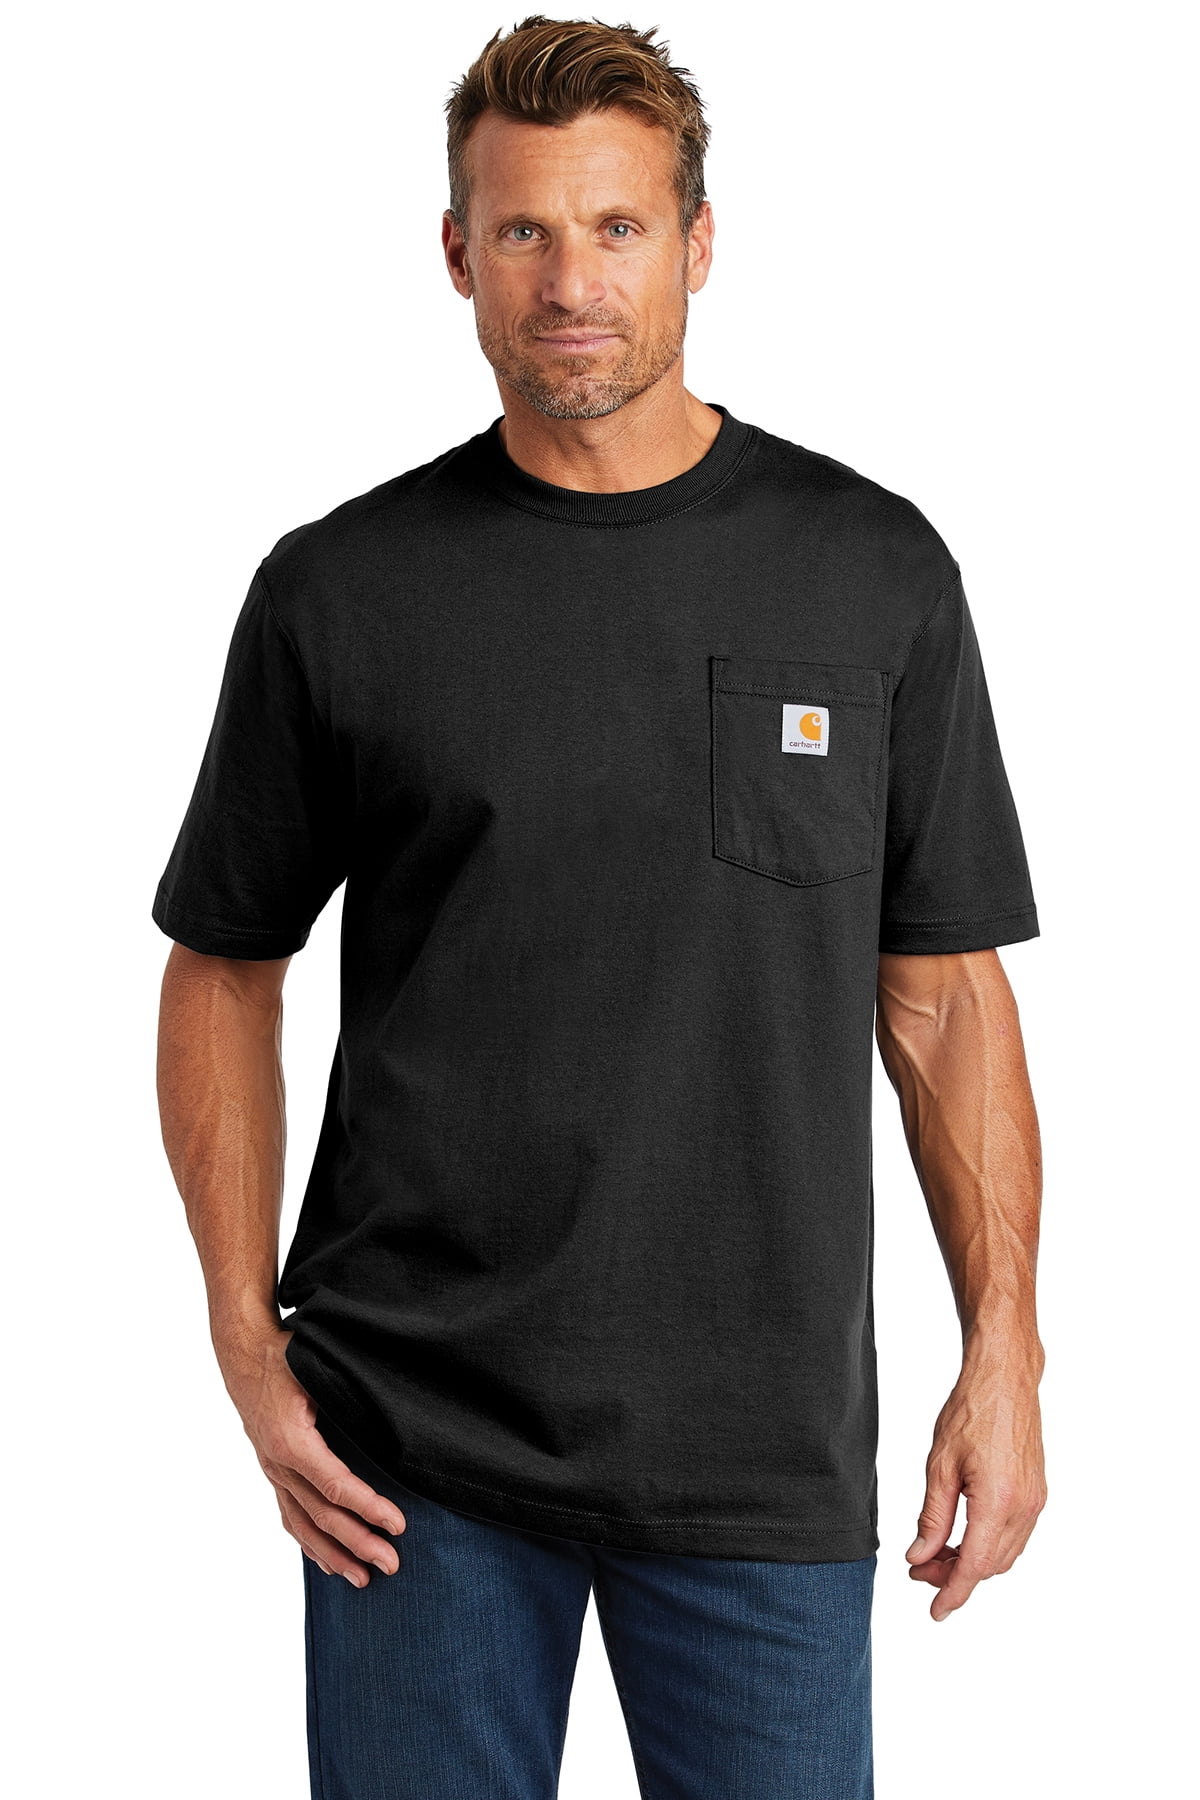 Regular and Big & Tall Sizes Carhartt mens K87 Workwear Short Sleeve T-shirt 